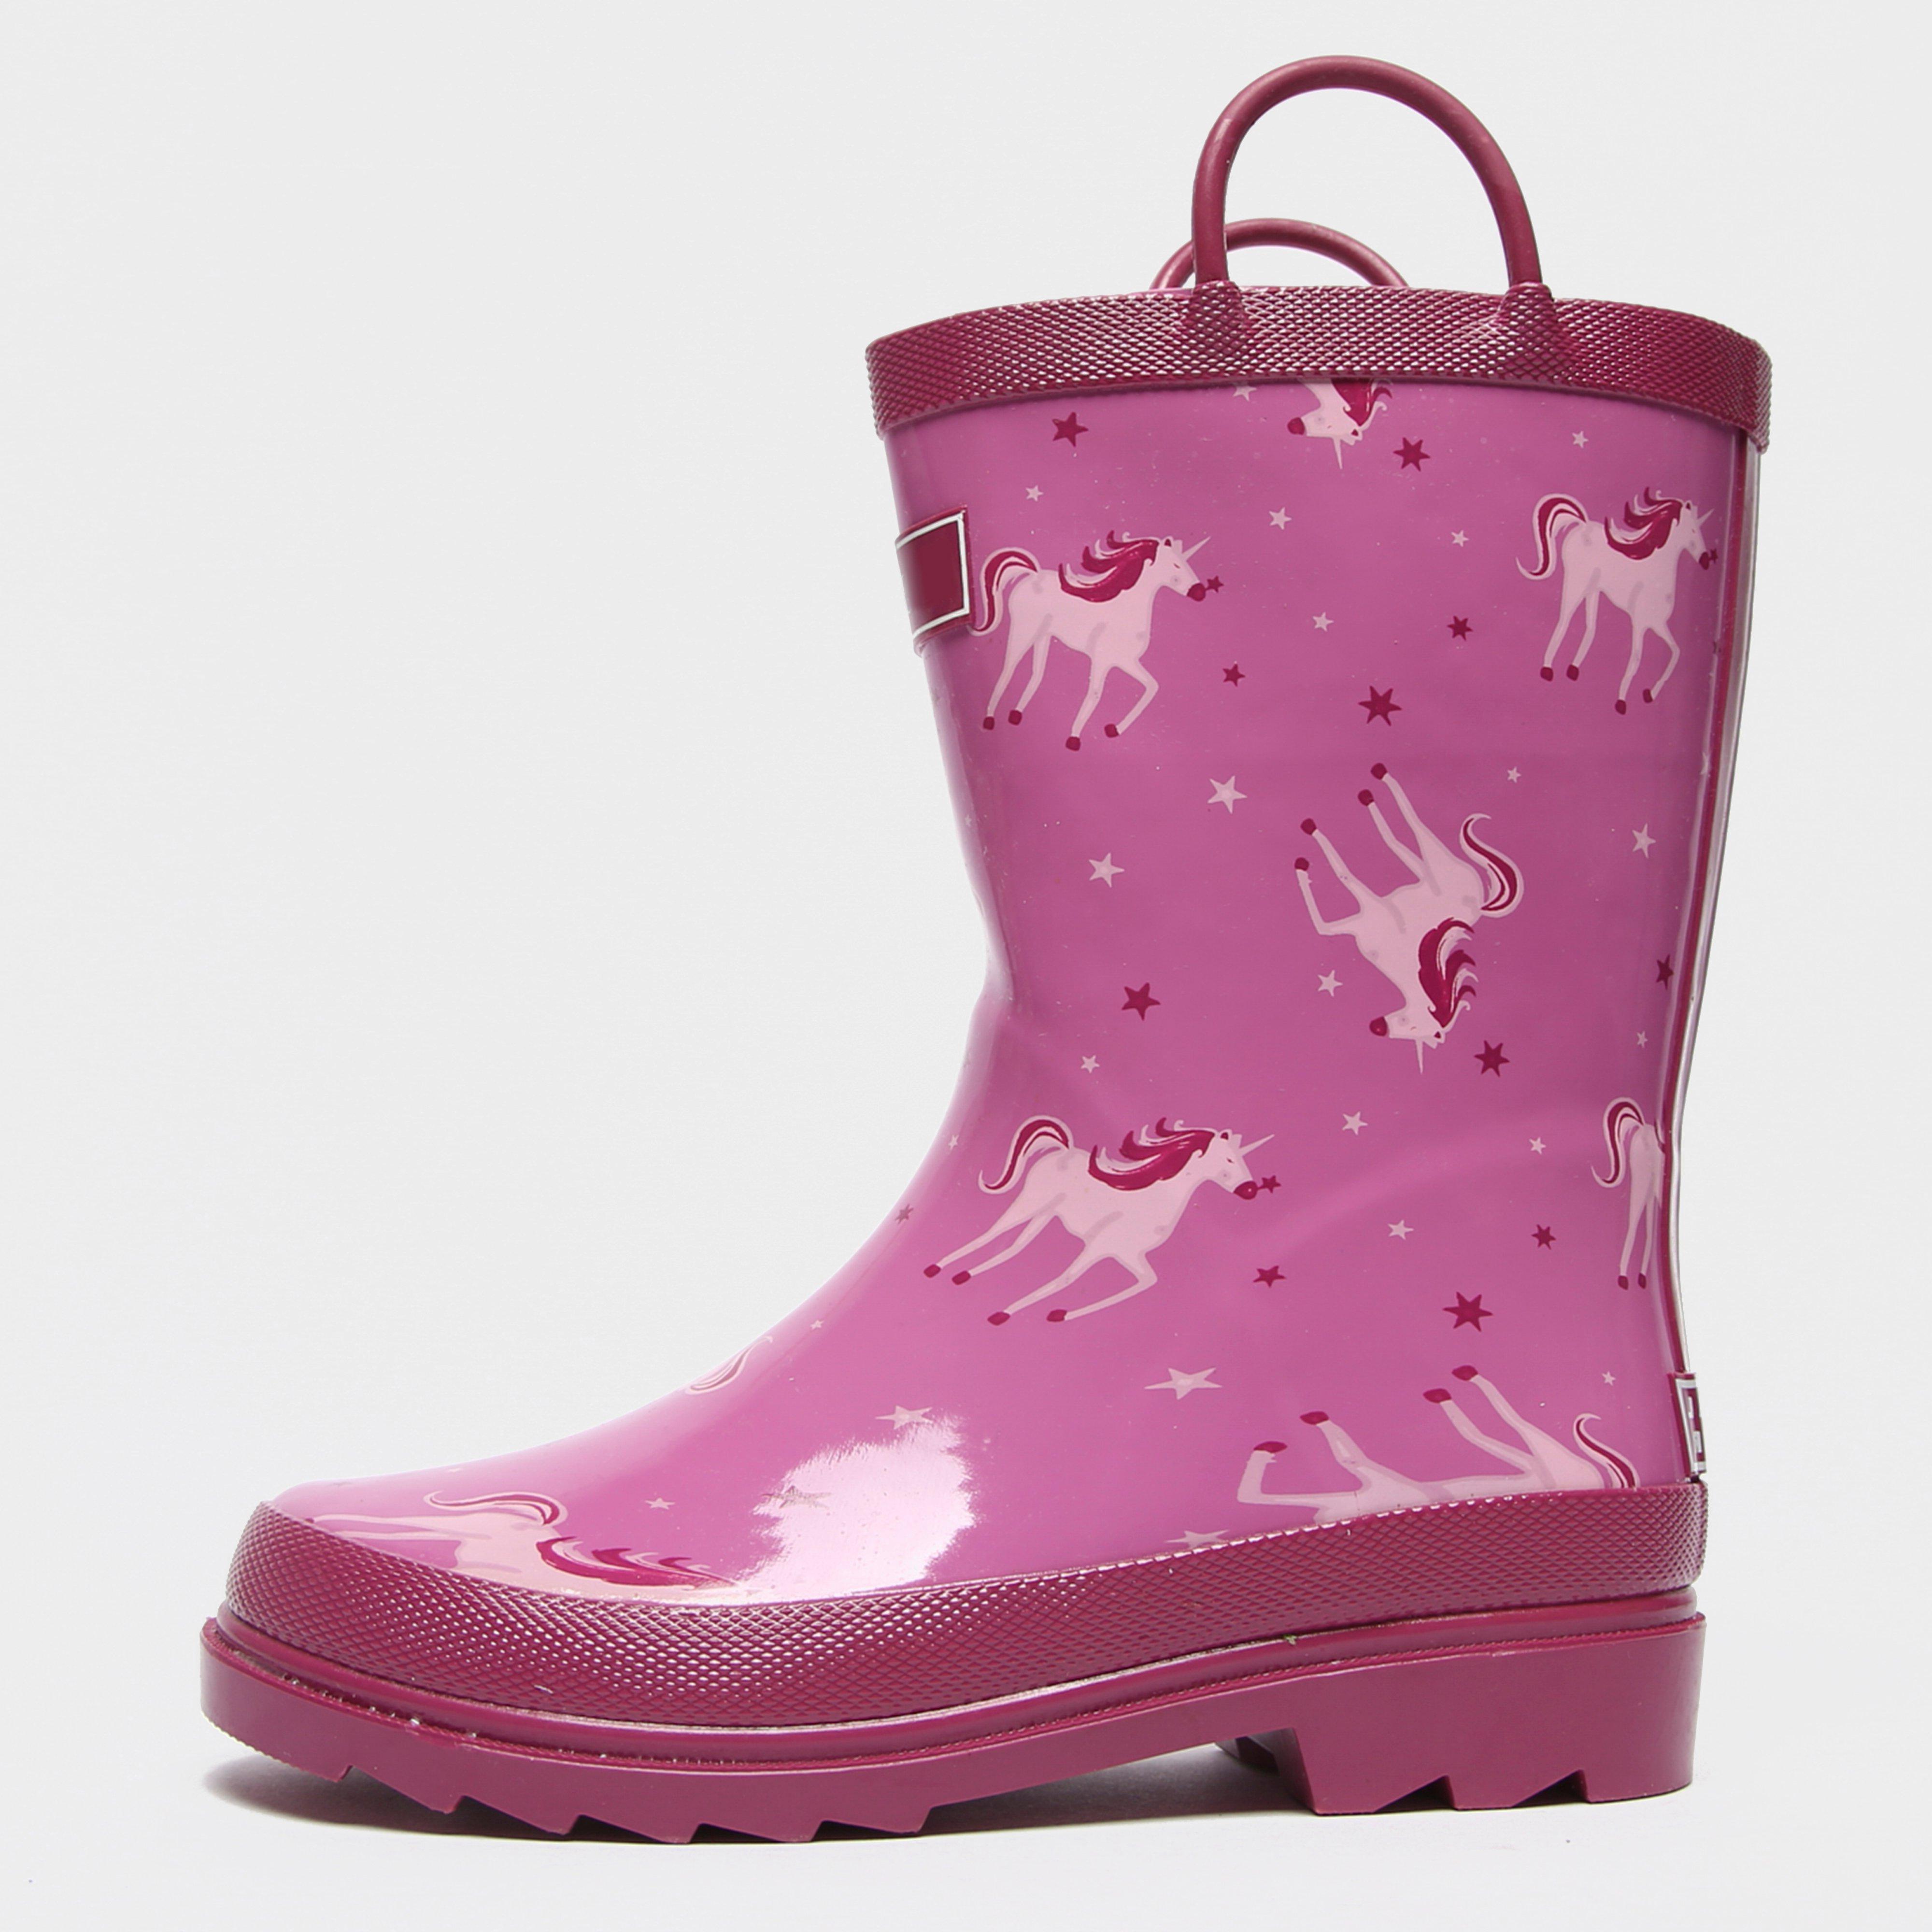 Regatta Kids Minnow Wellington Boots - Pink/pnk  Pink/pnk